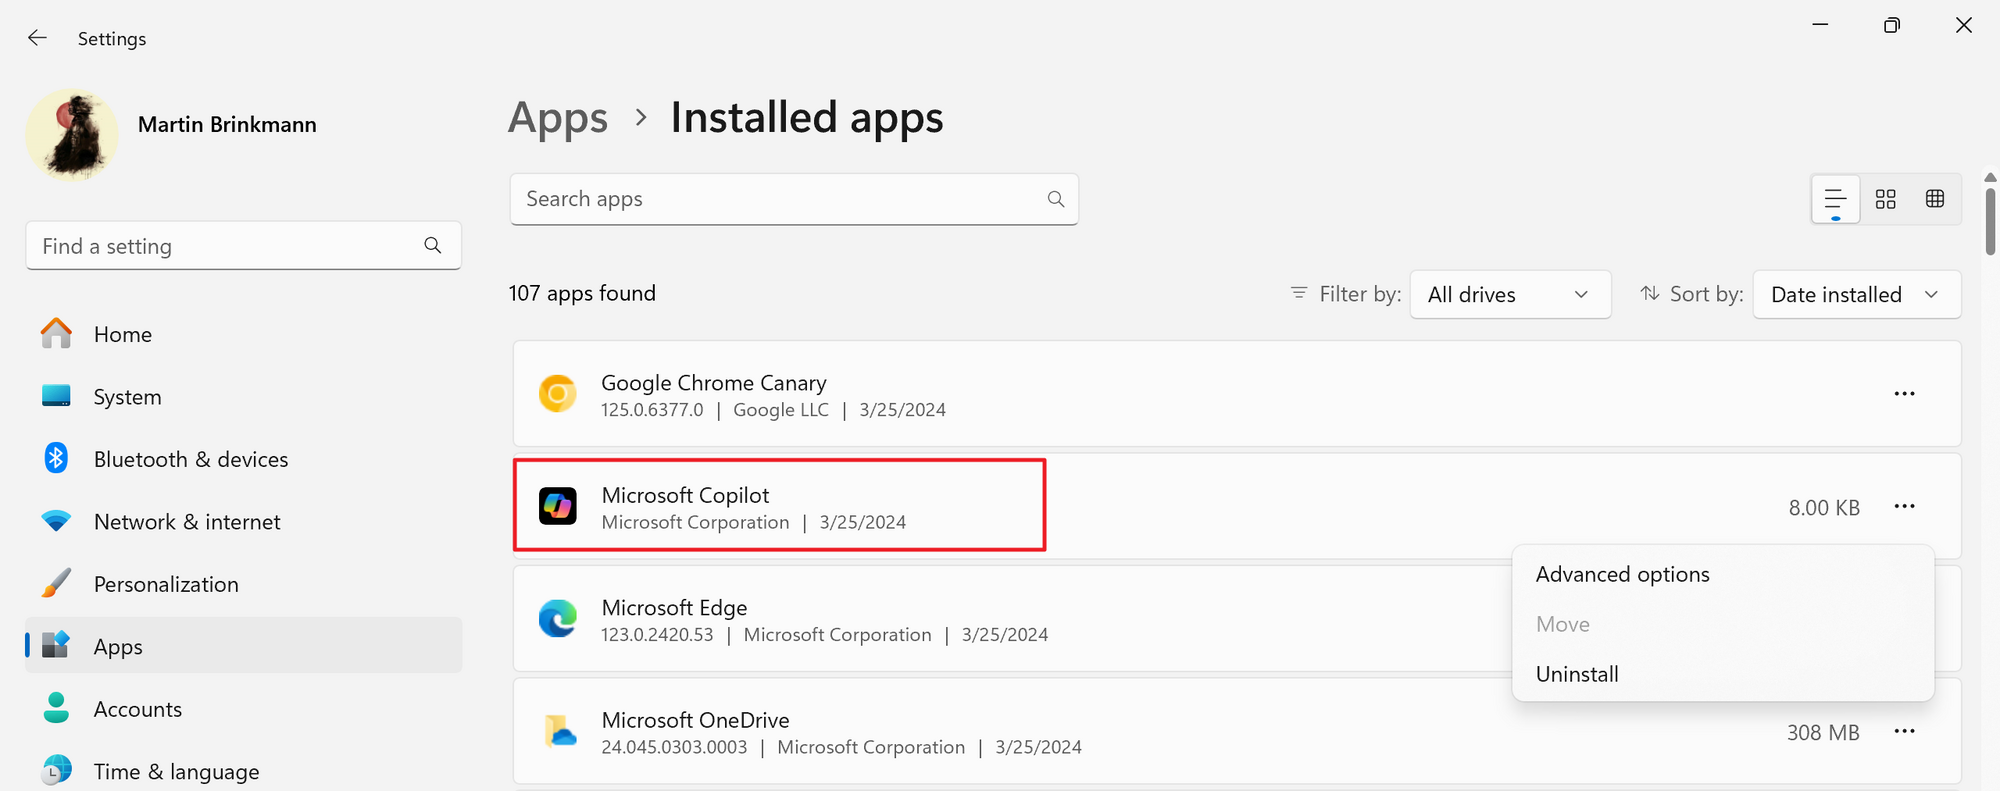 Microsoft Copilot app getting installed on Windows devices microsoft-copilot-app.png